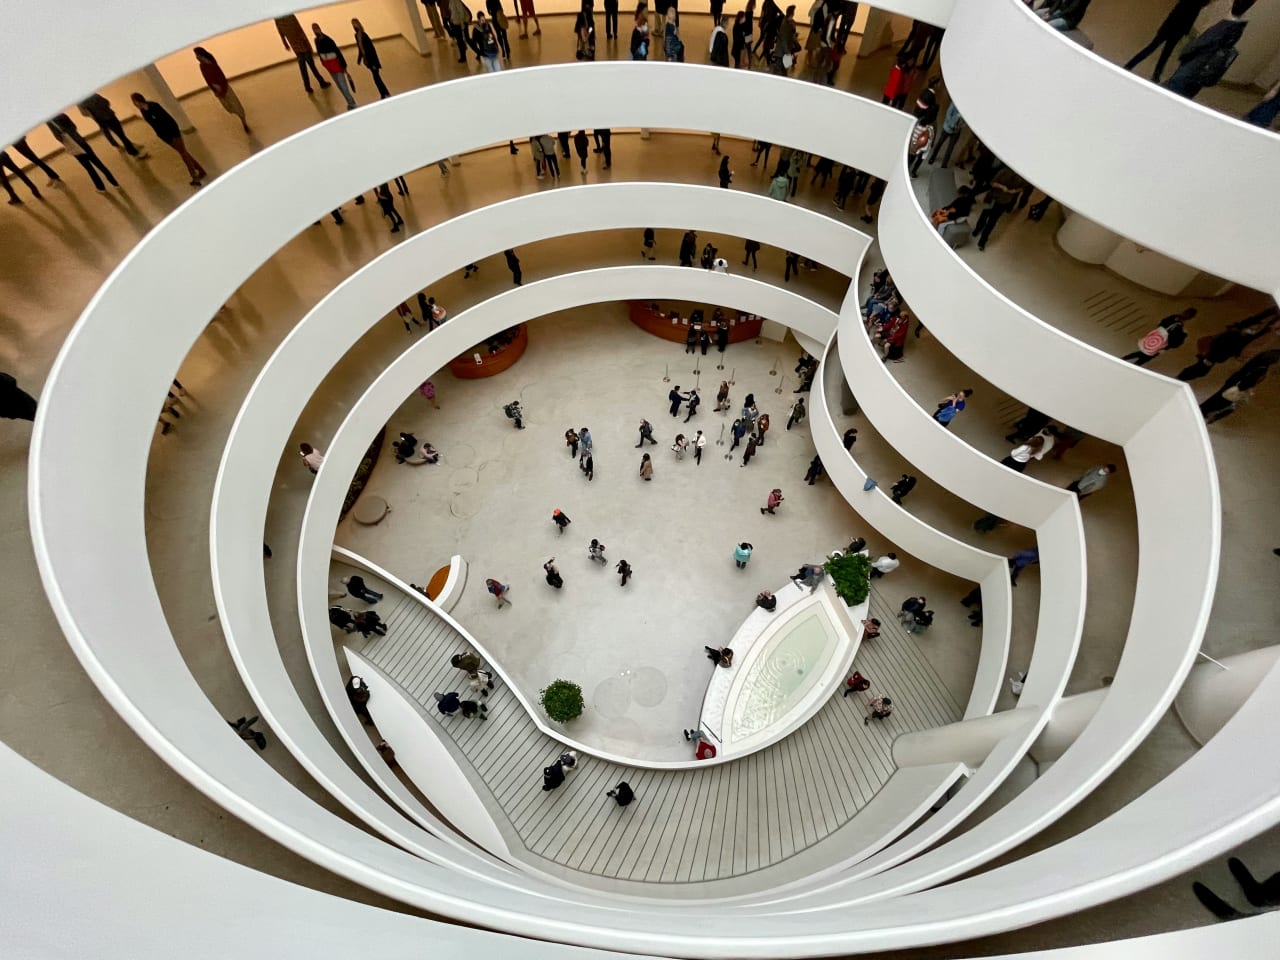 Guggenheim-Museum in New York, USA © unsplash.com - nicholas-ceglia-YM1U9ZOQimk